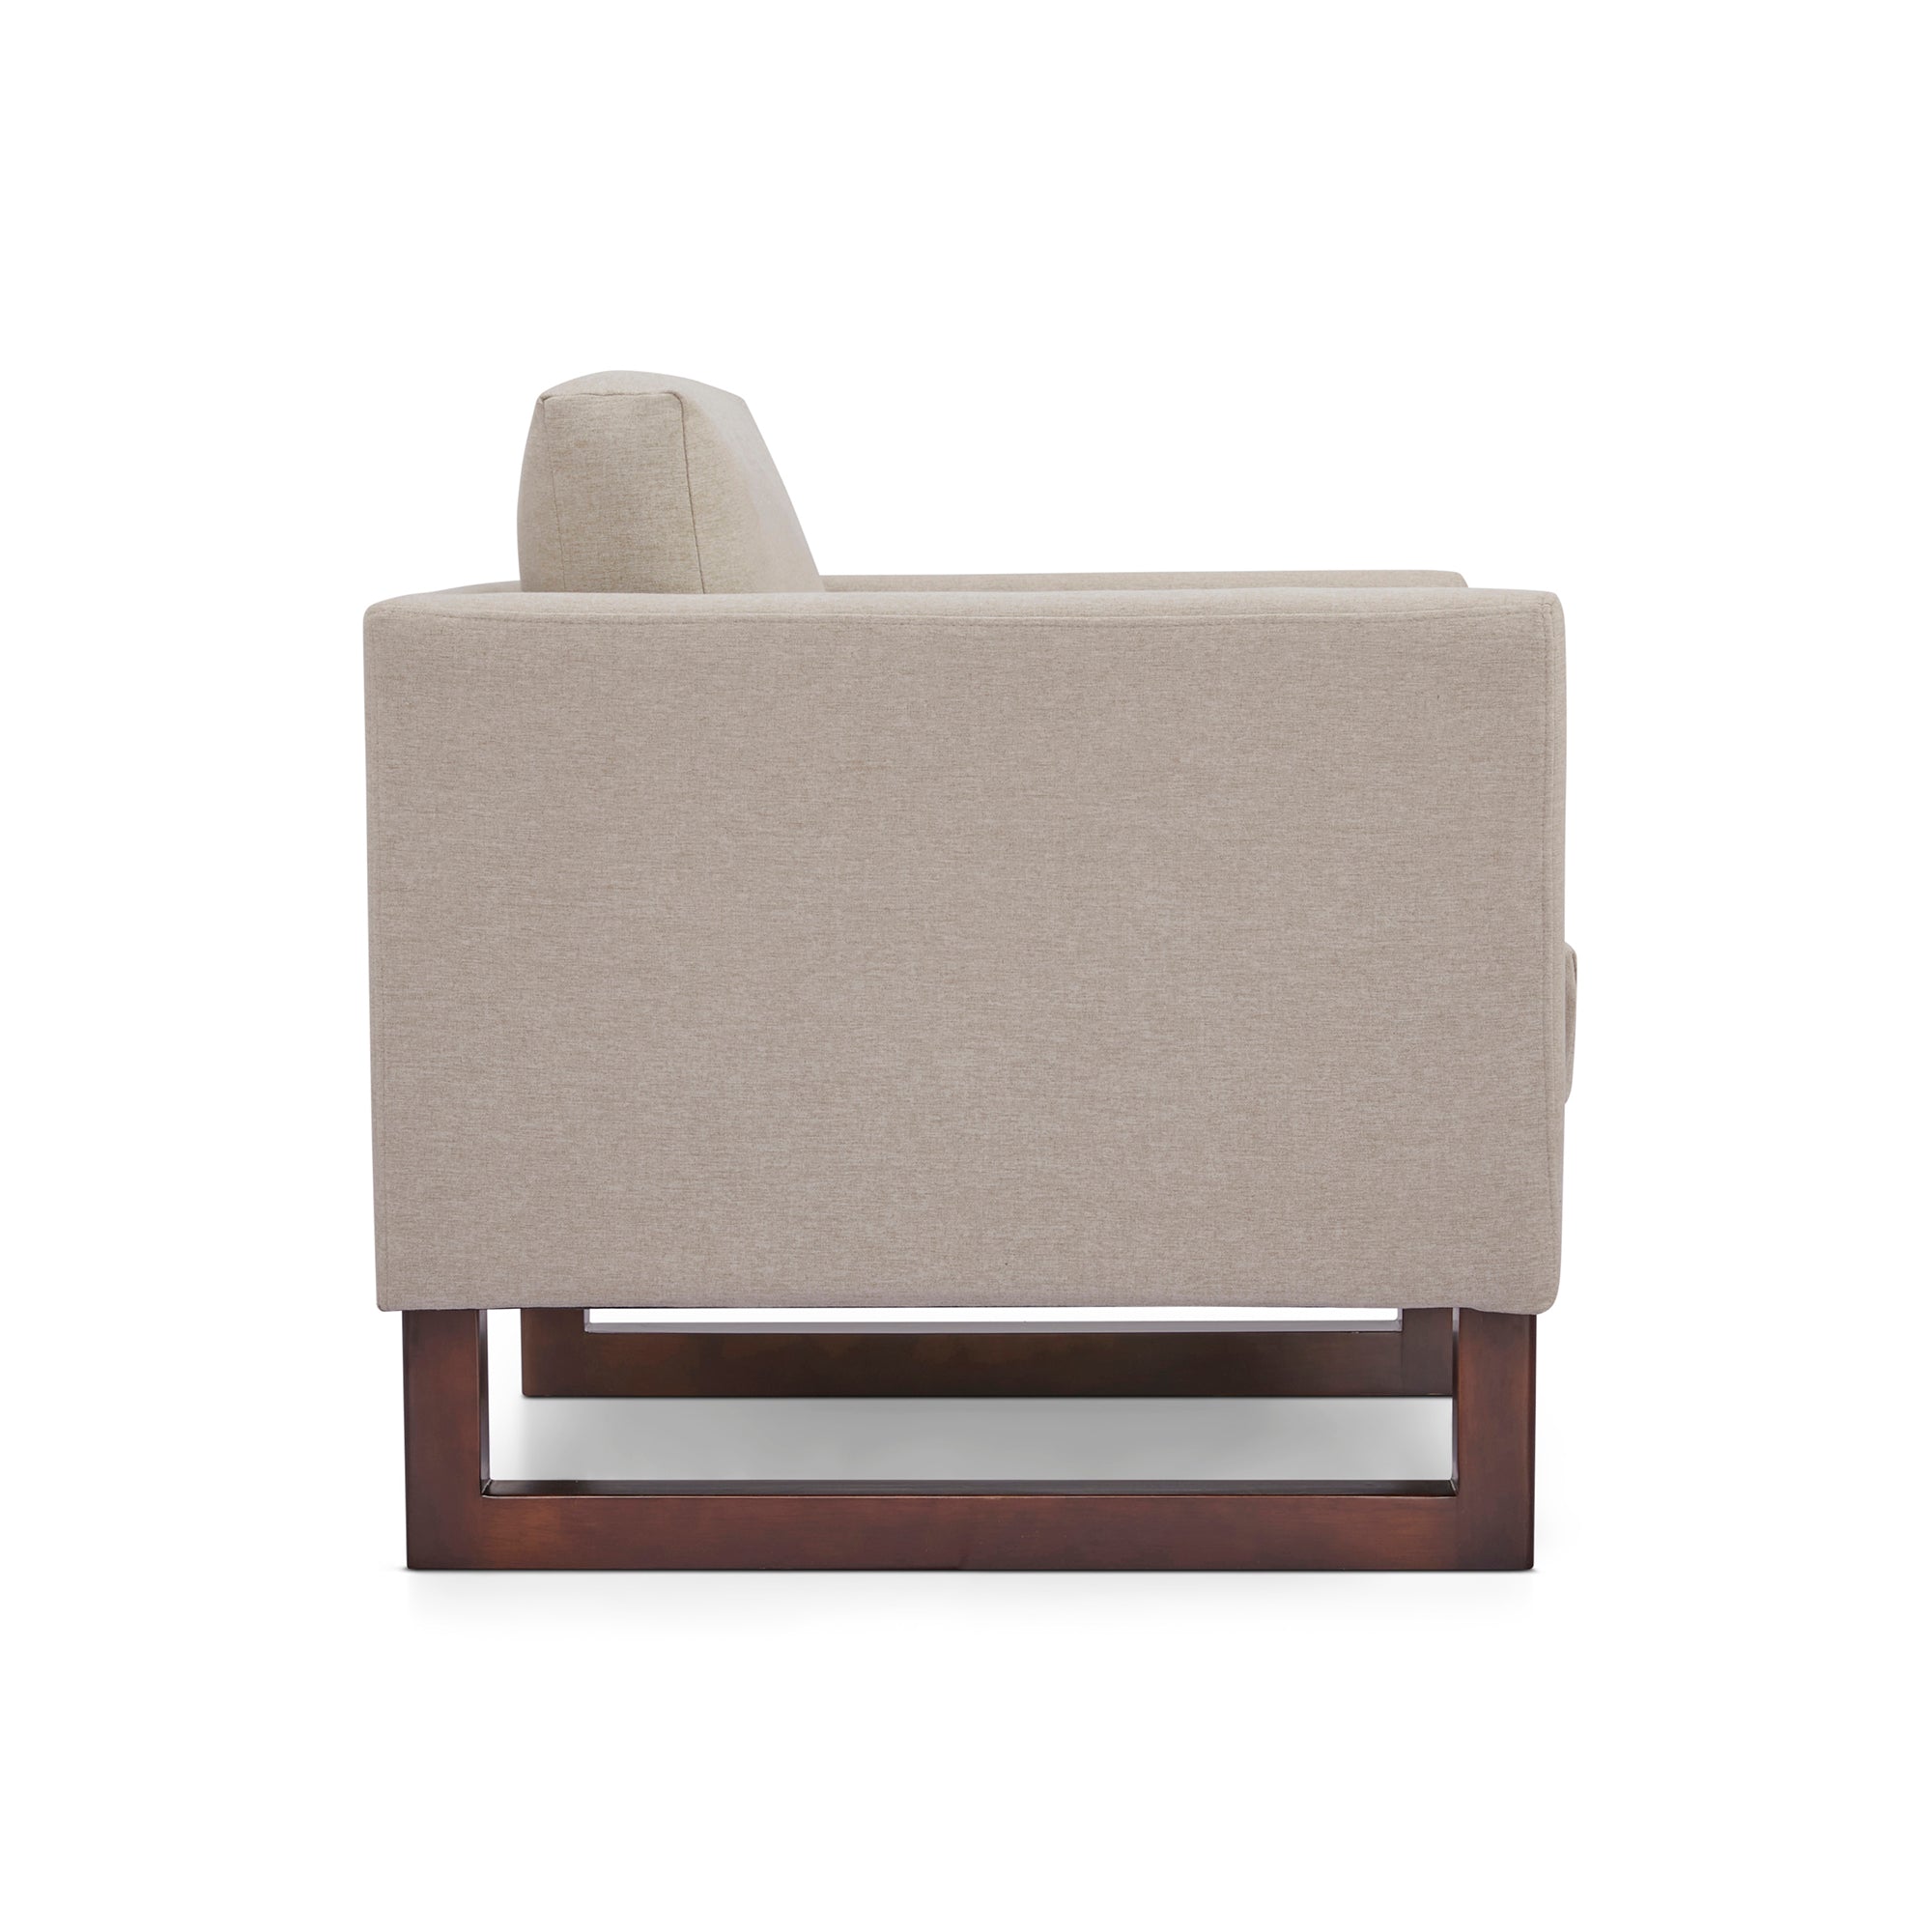 Hayden Accent Chair - Set of 2 - SunHaven Home